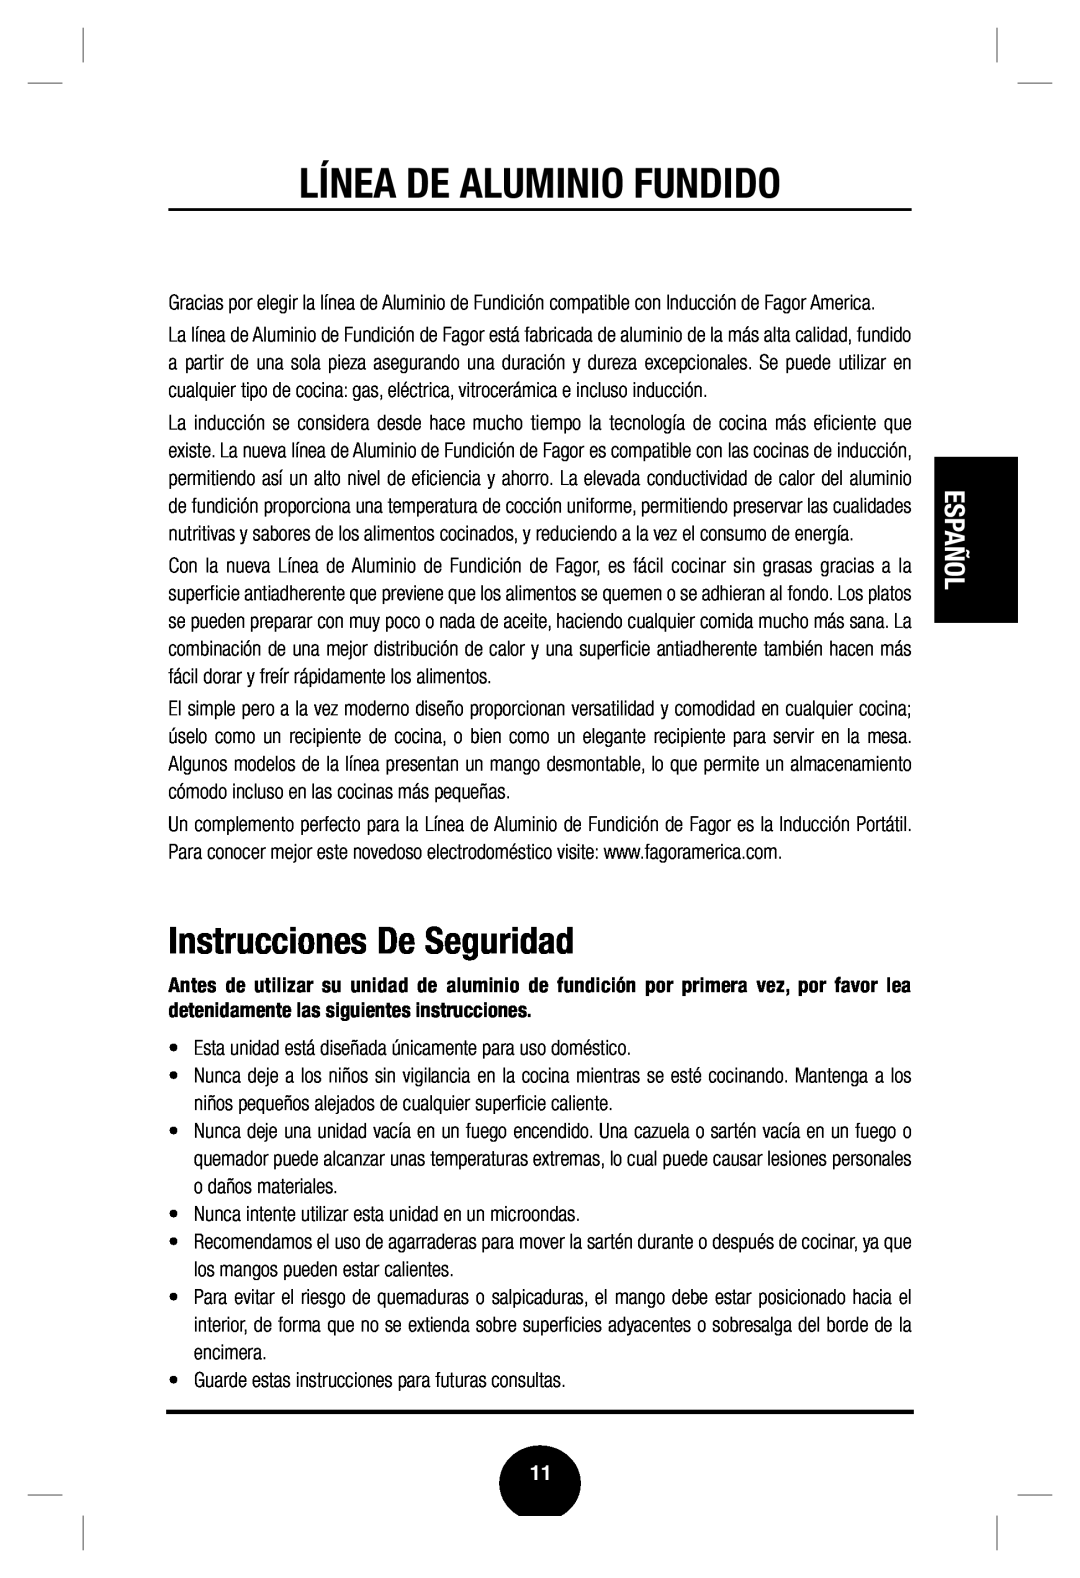 Fagor America Cast Aluminum Cookware user manual Línea De Aluminio Fundido, Instrucciones De Seguridad, Español 